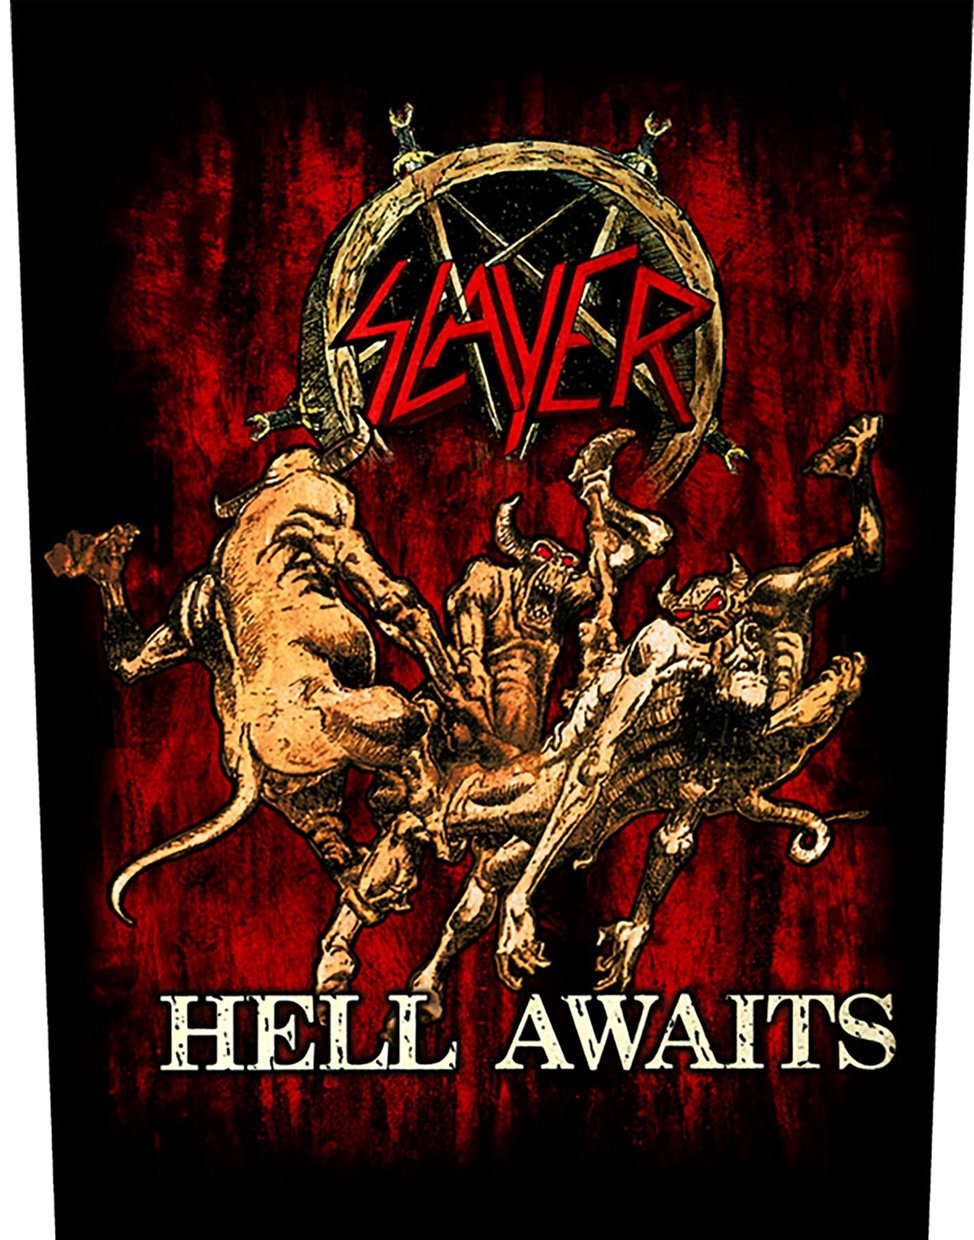 Patch-uri Slayer Hell Awaits Patch-uri